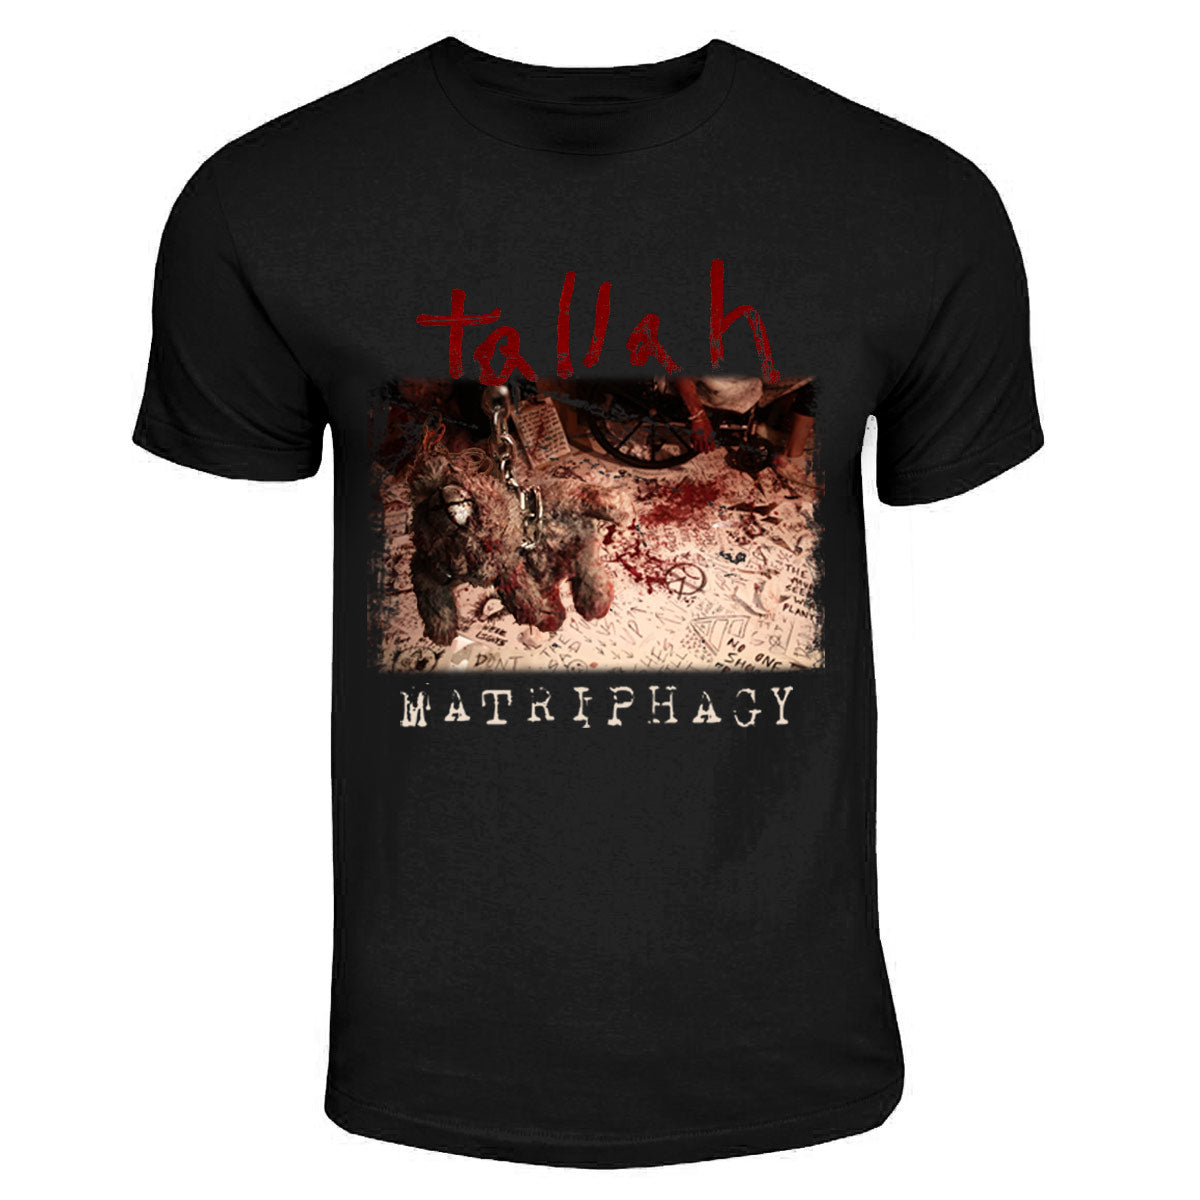 Tallah "Matriphagy" T shirt